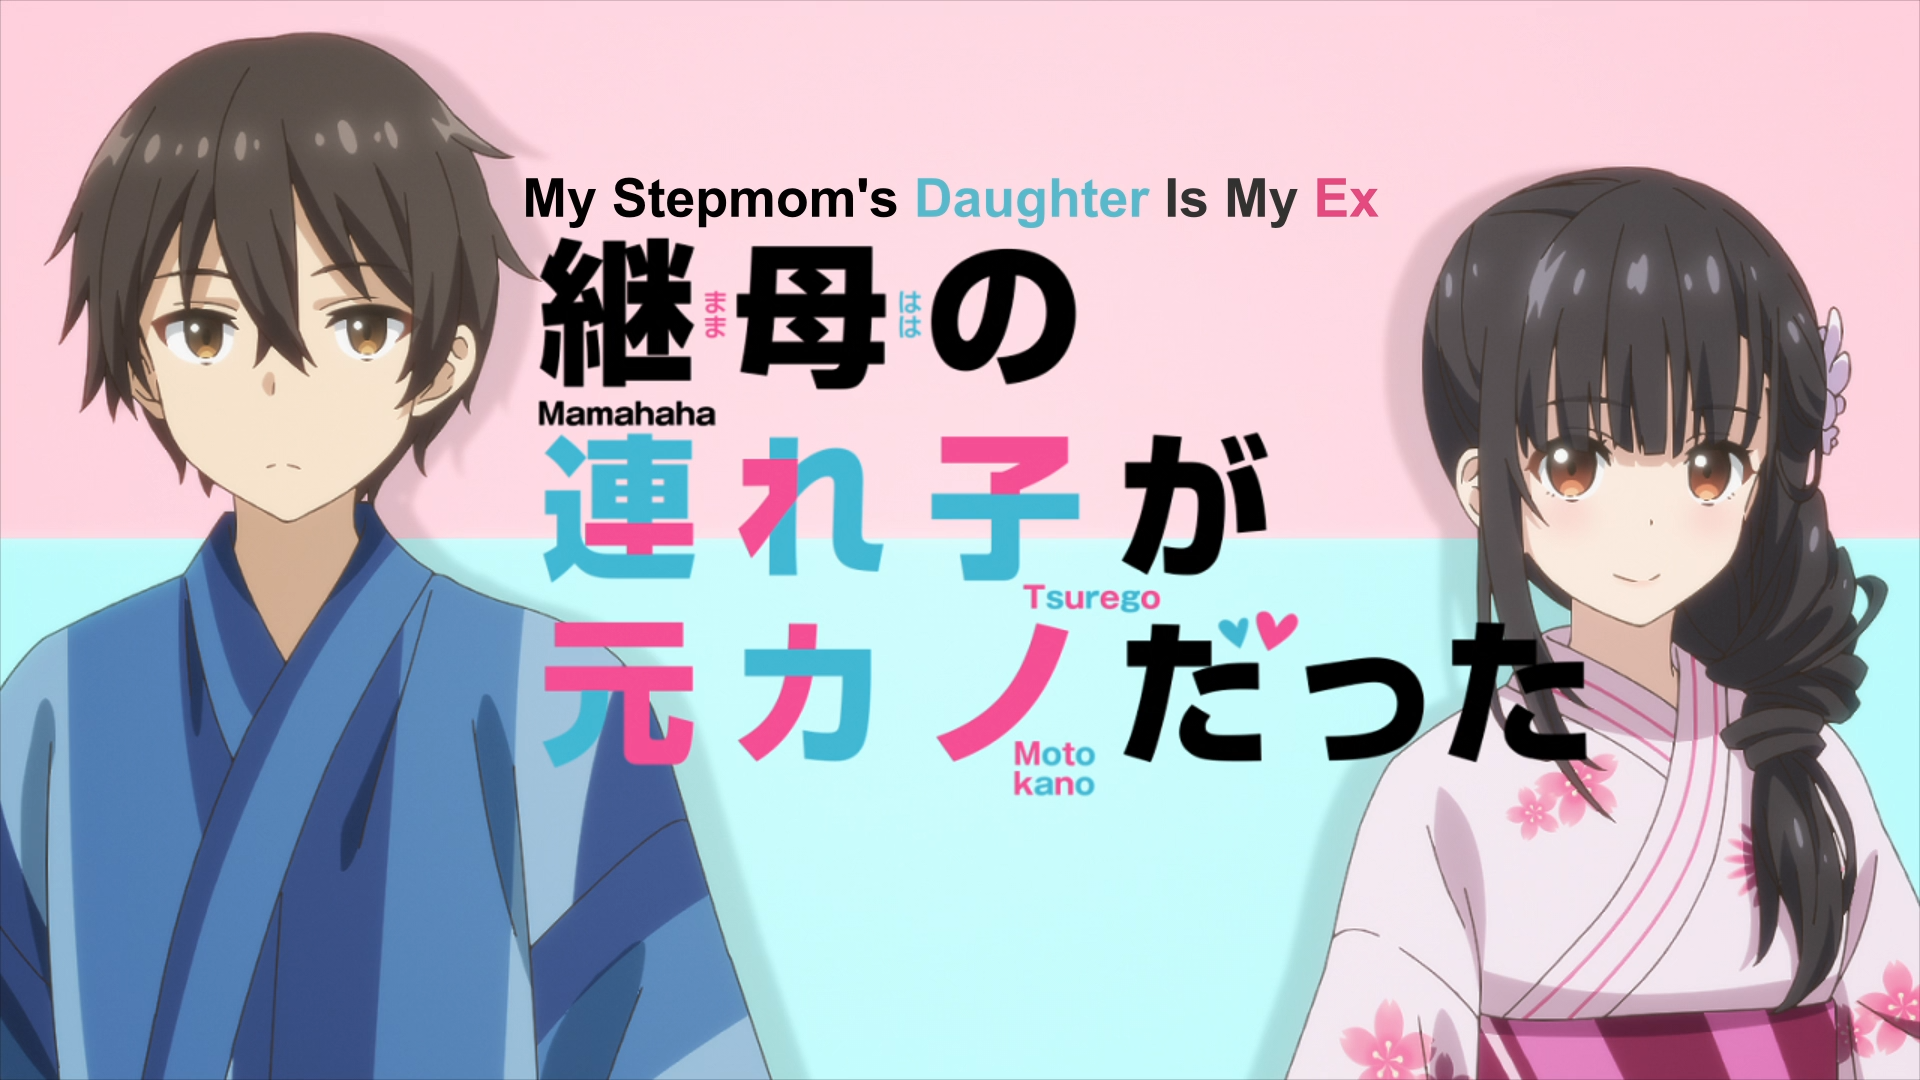 Anime Like My Stepmom's Daughter Is My Ex